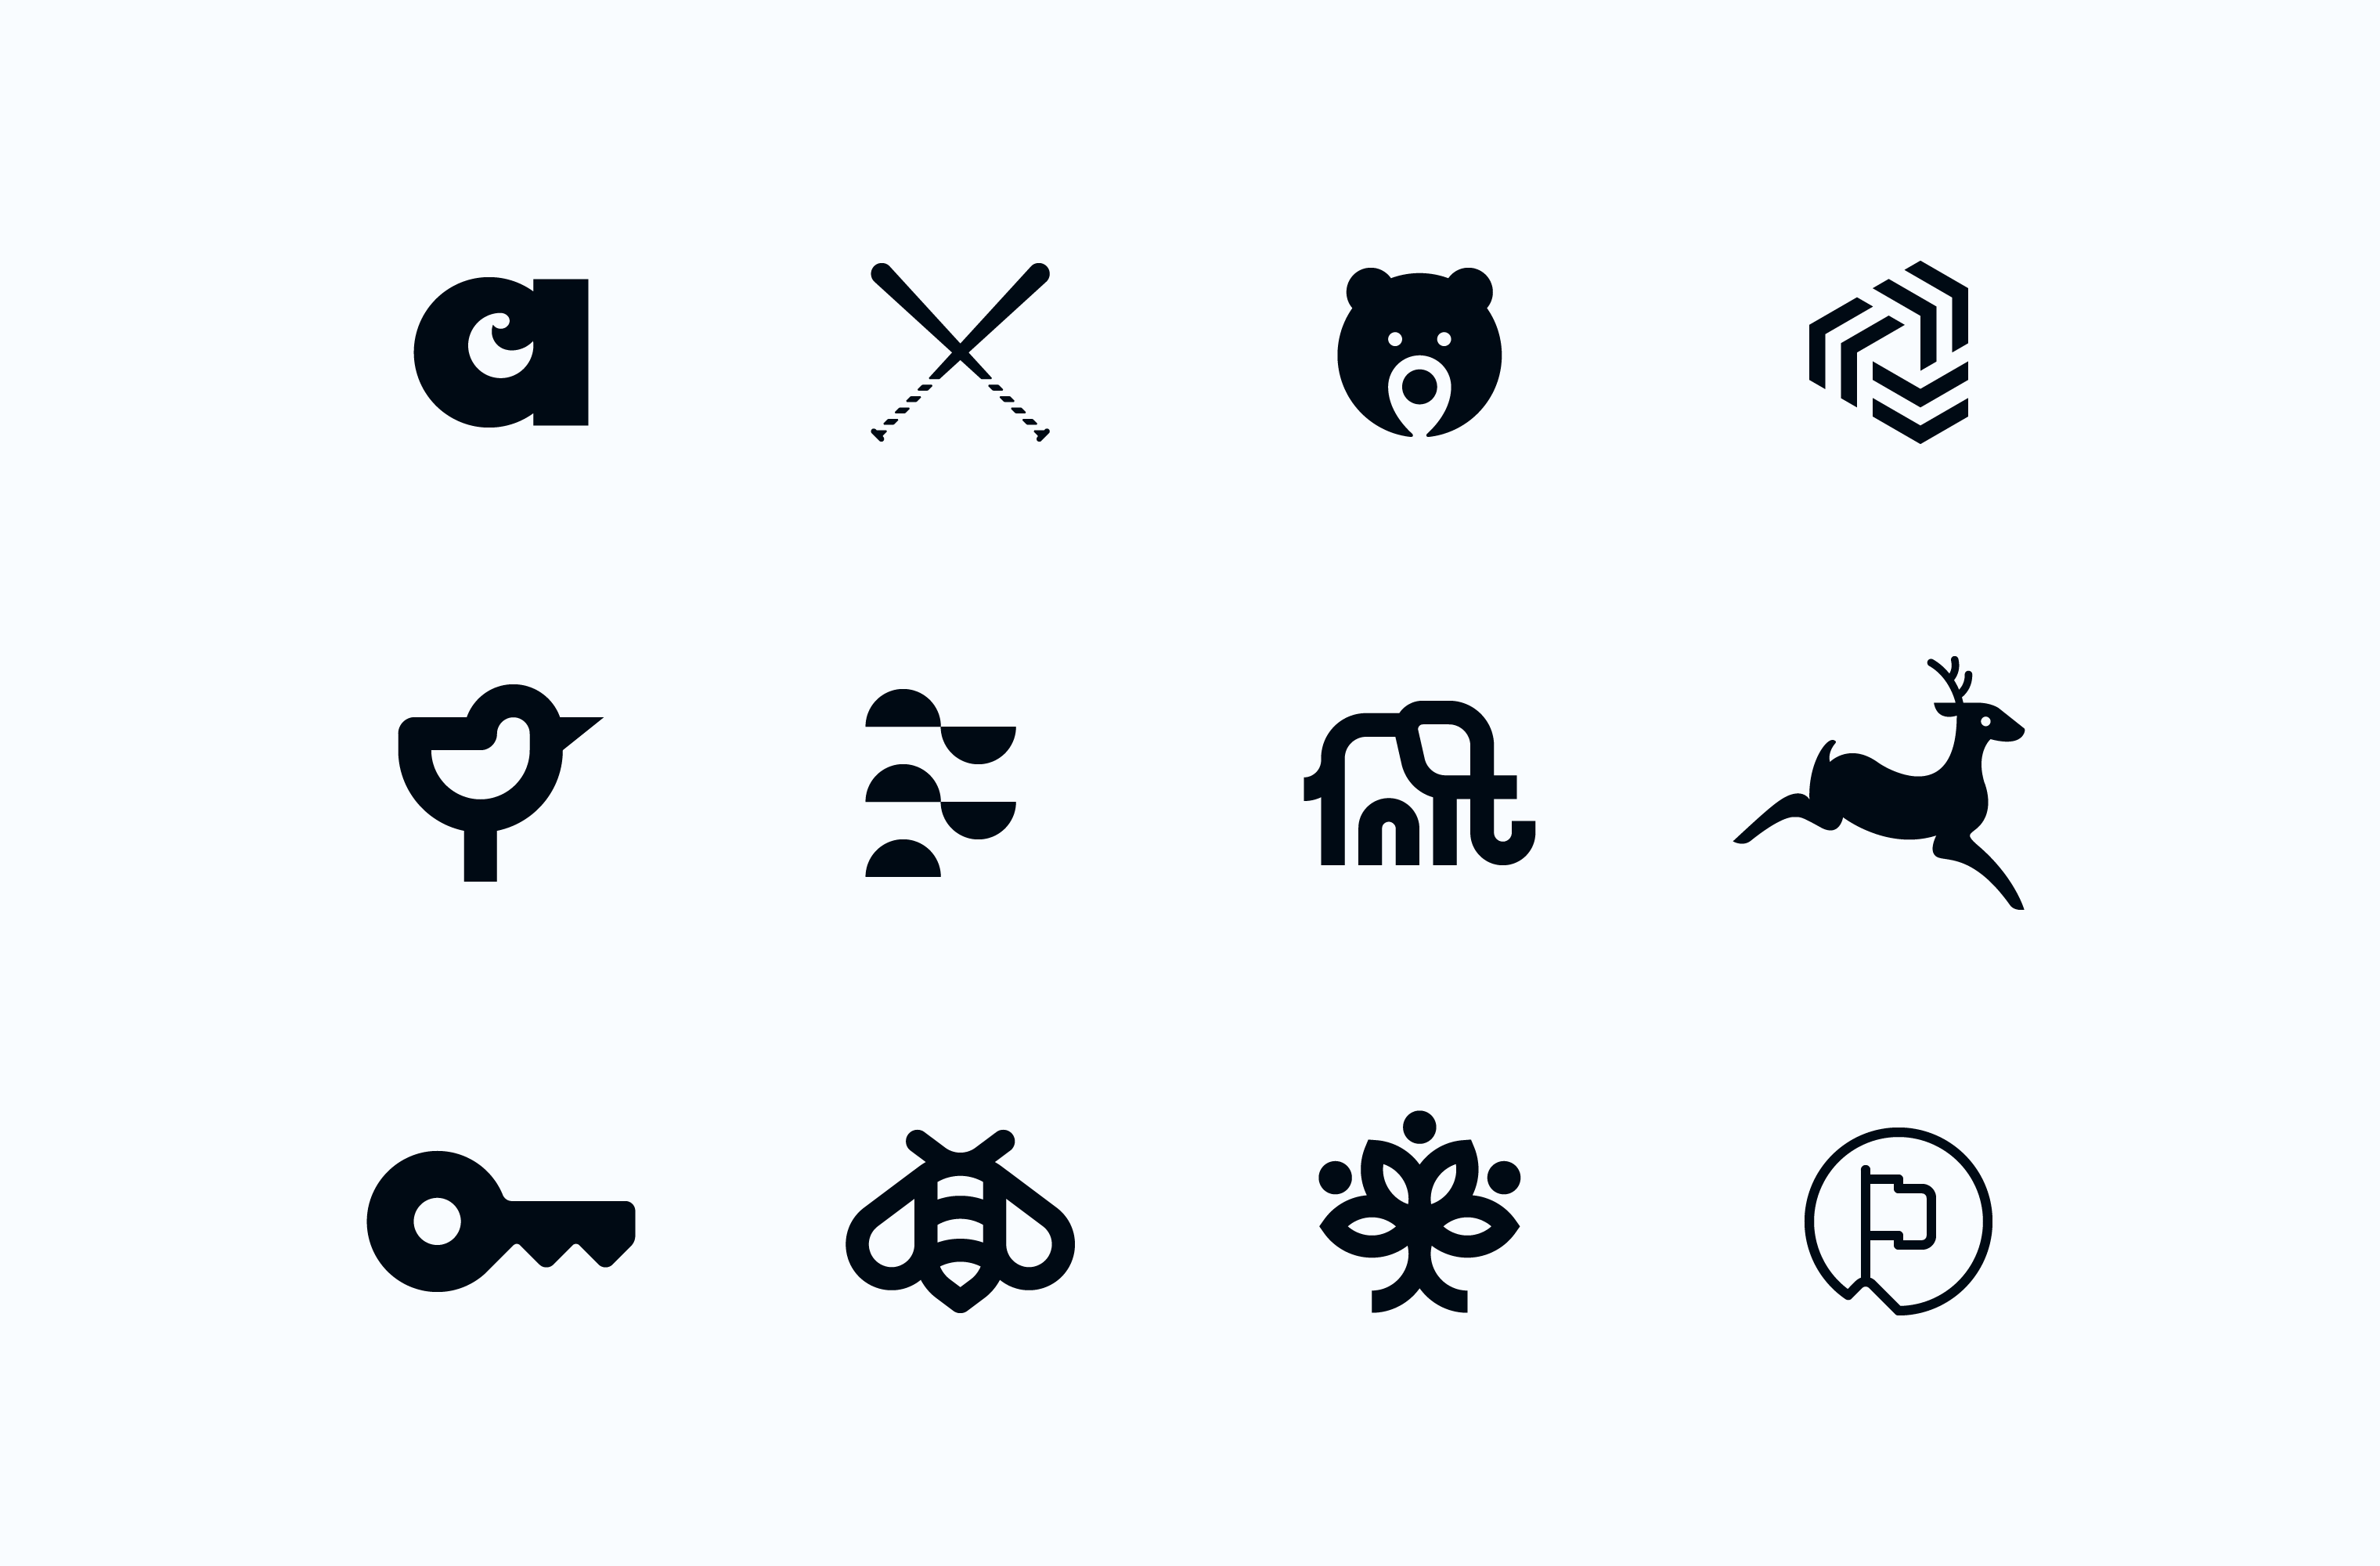 Misc symbols